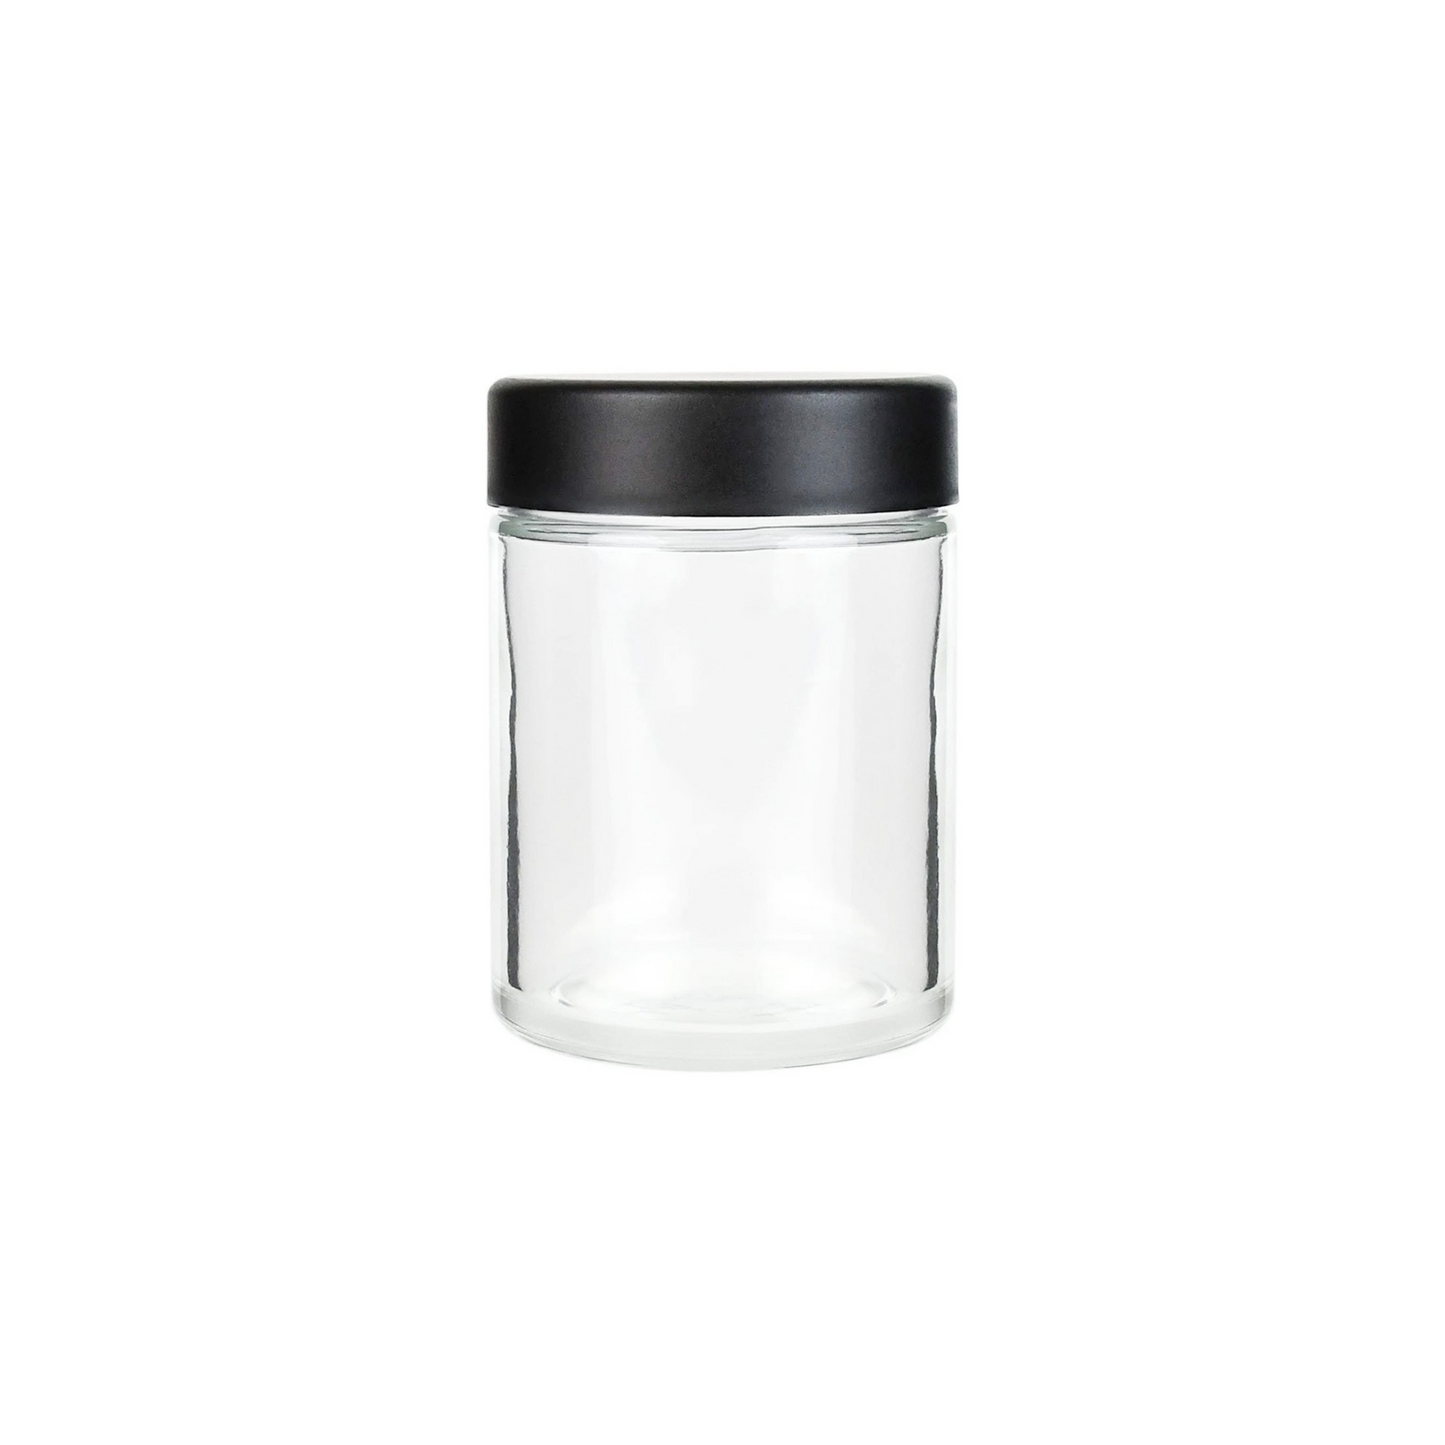 4oz Child Resistant Glass Jars with Black Caps 7 Grams 100 COUNT